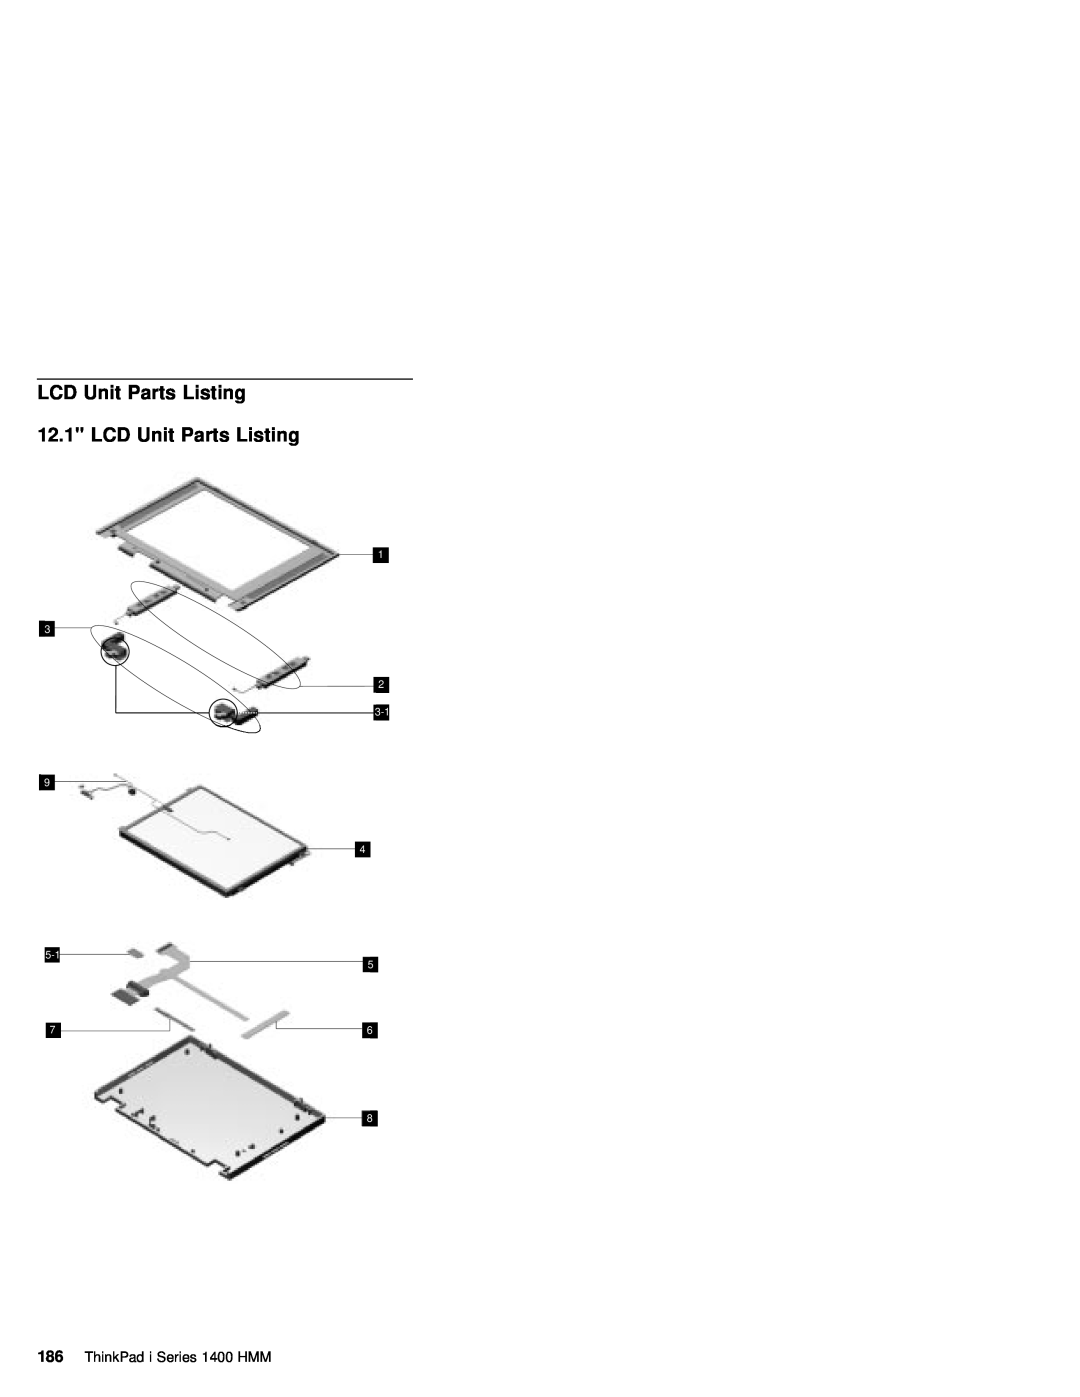 IBM 1400 (2611) manual LCD Unit Parts Listing 12.1 LCD Unit Parts Listing, ThinkPad i Series 1400 HMM 